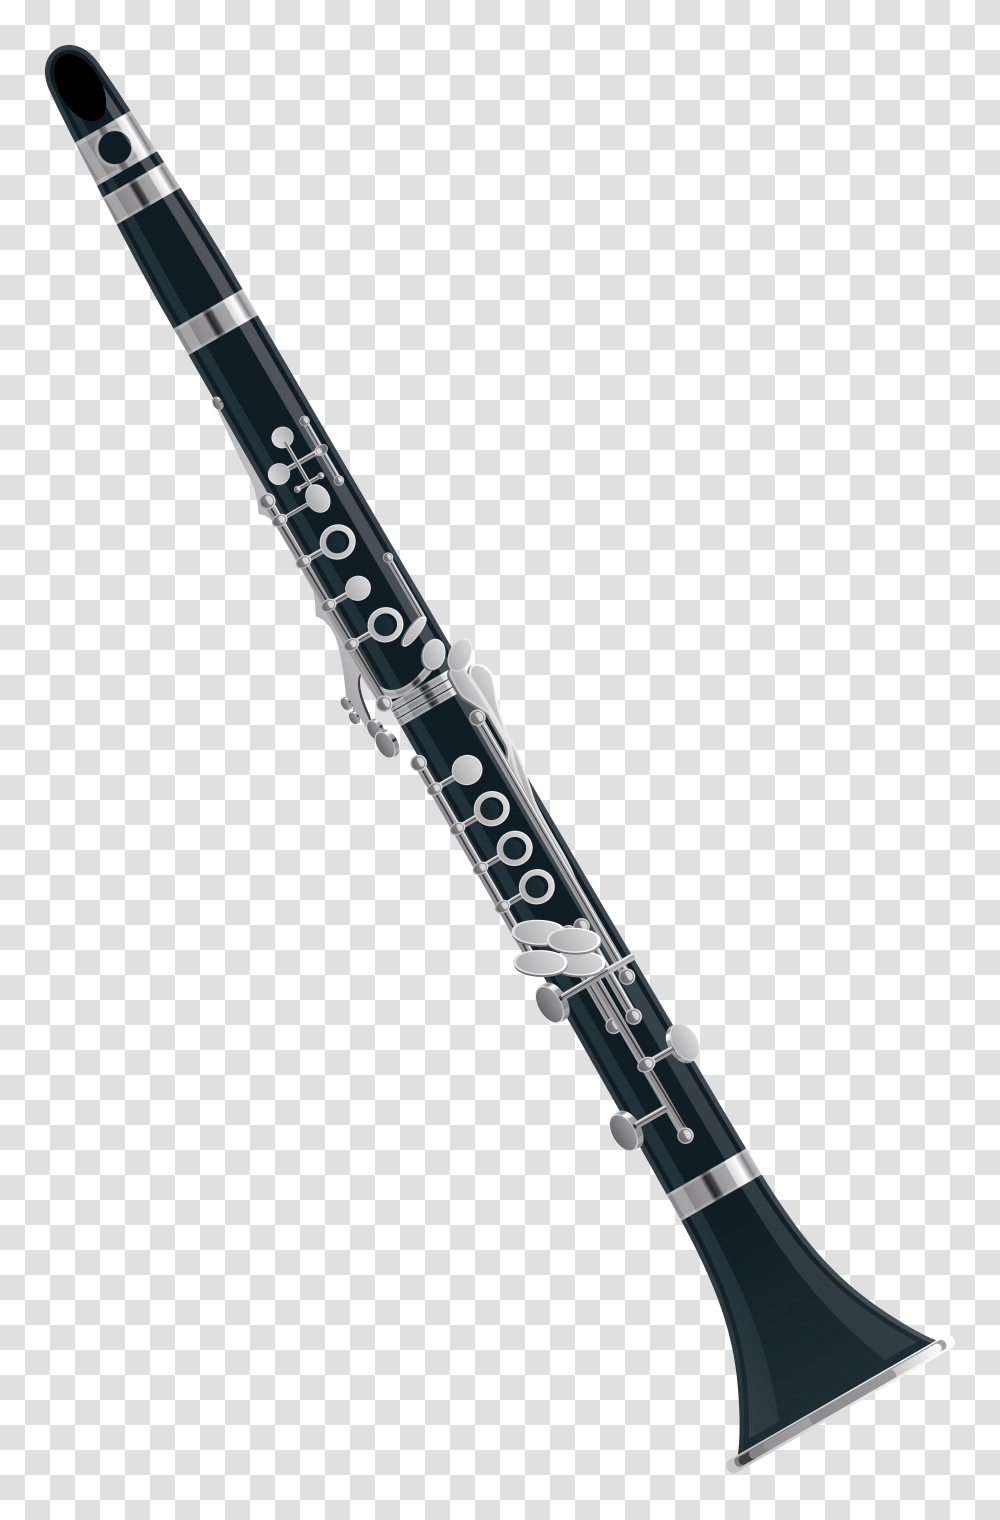 Rune Sword Sword, Clarinet, Musical Instrument, Oboe, Construction Crane Transparent Png